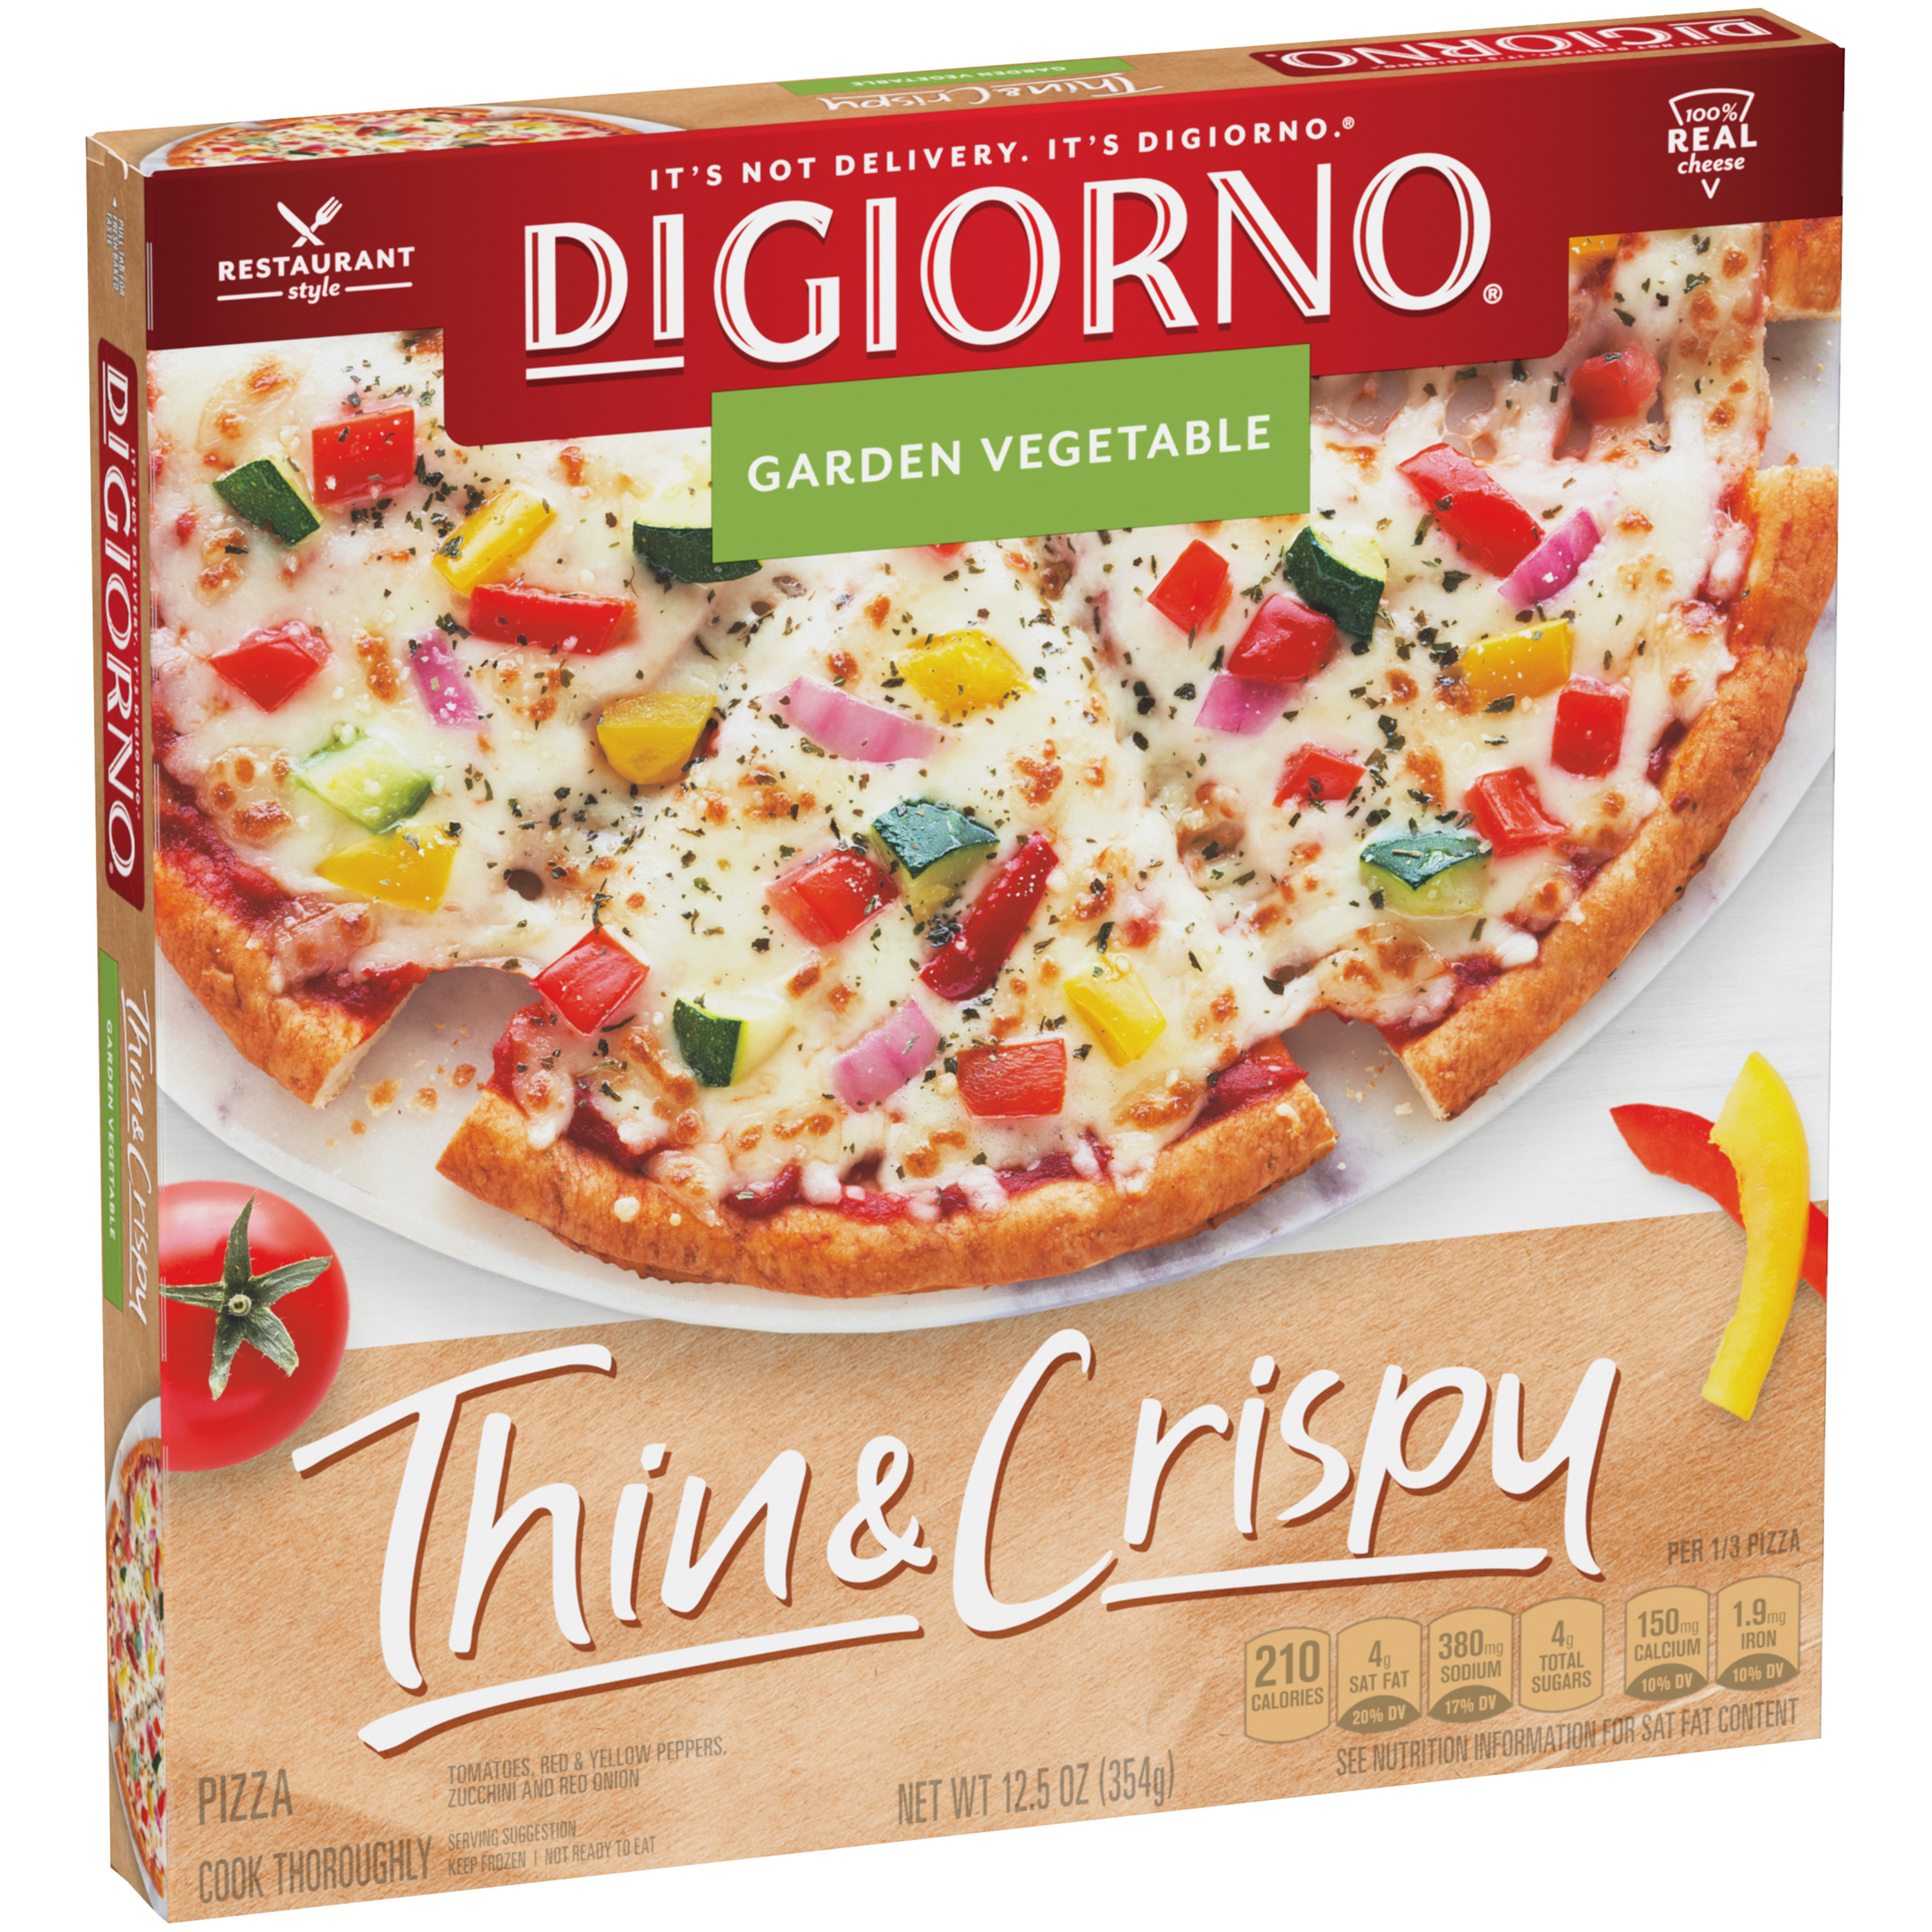 DIGIORNO Thin & Crispy Garden Vegetable Frozen Pizza - image 2 of 13